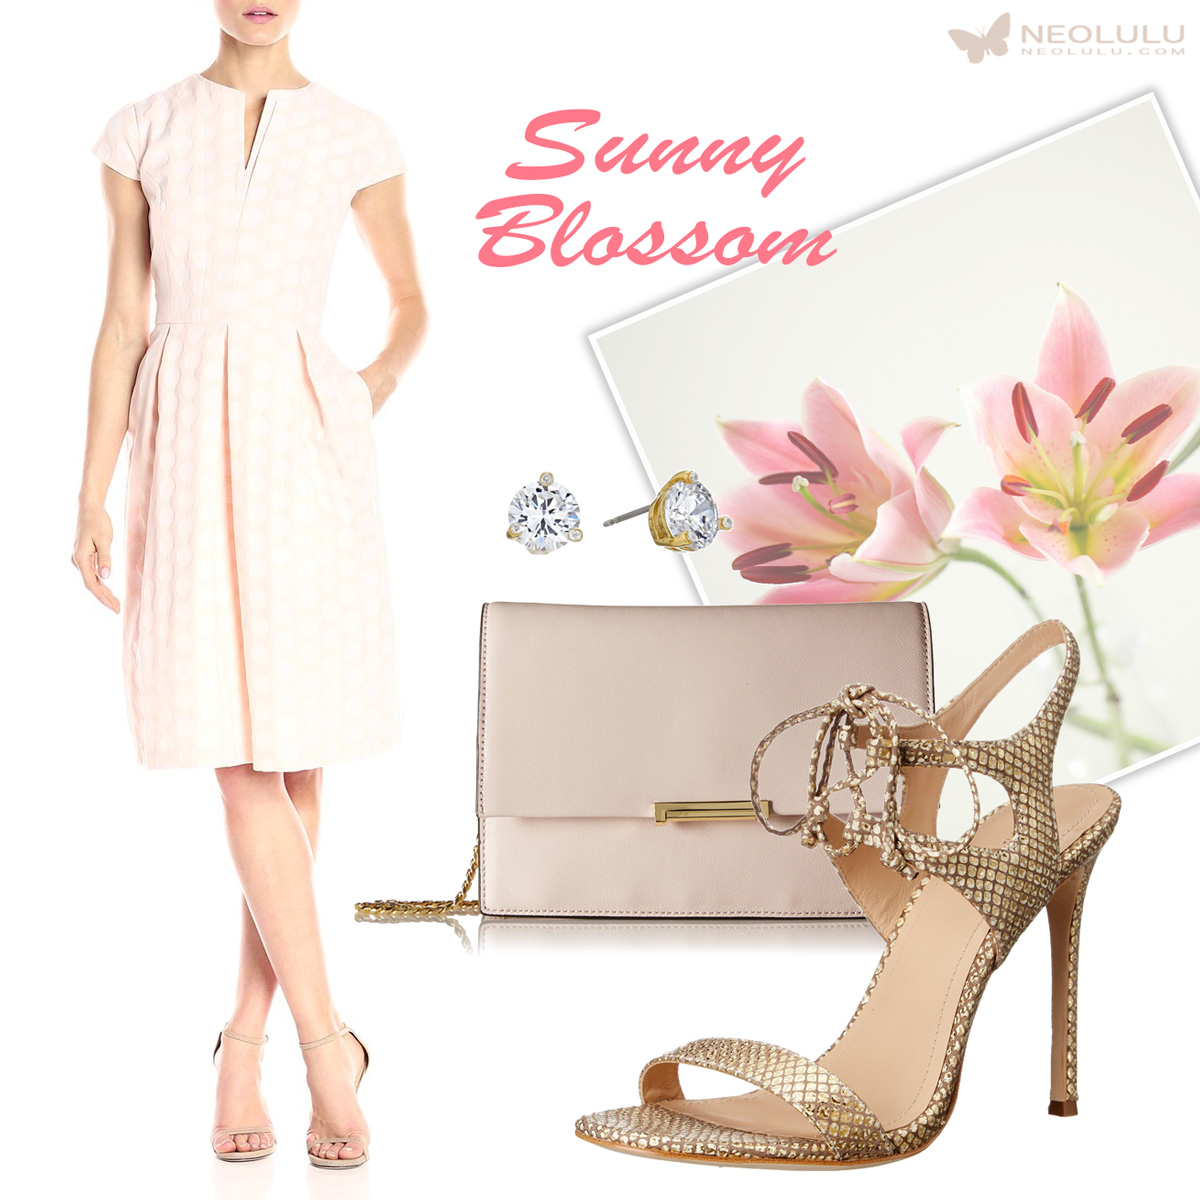 Sunny Blossom: Helene Bergman Dress Cocktail Outfit | NEOLULU